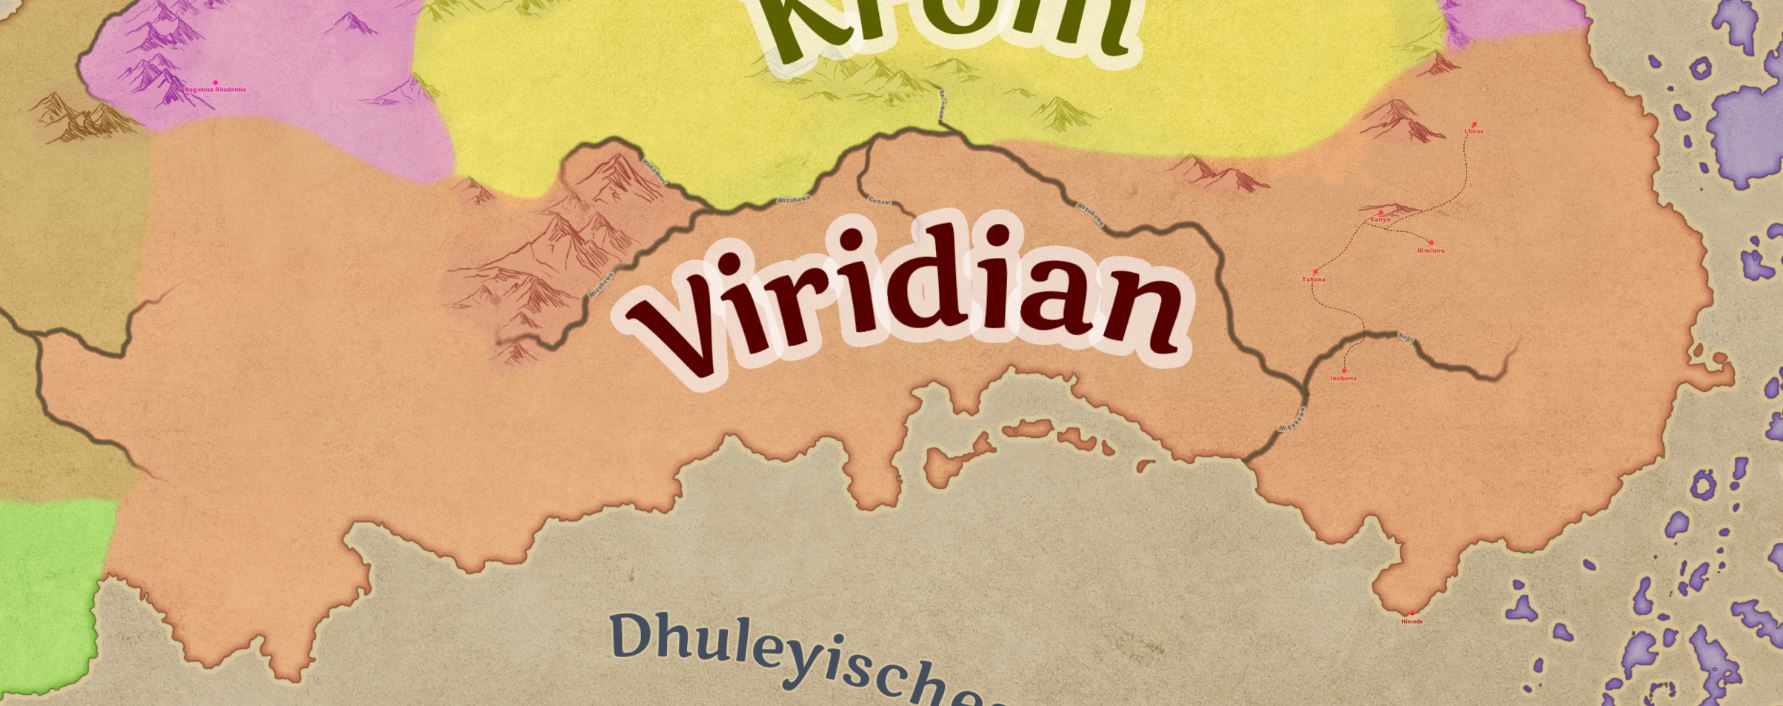 Viridian.jpg